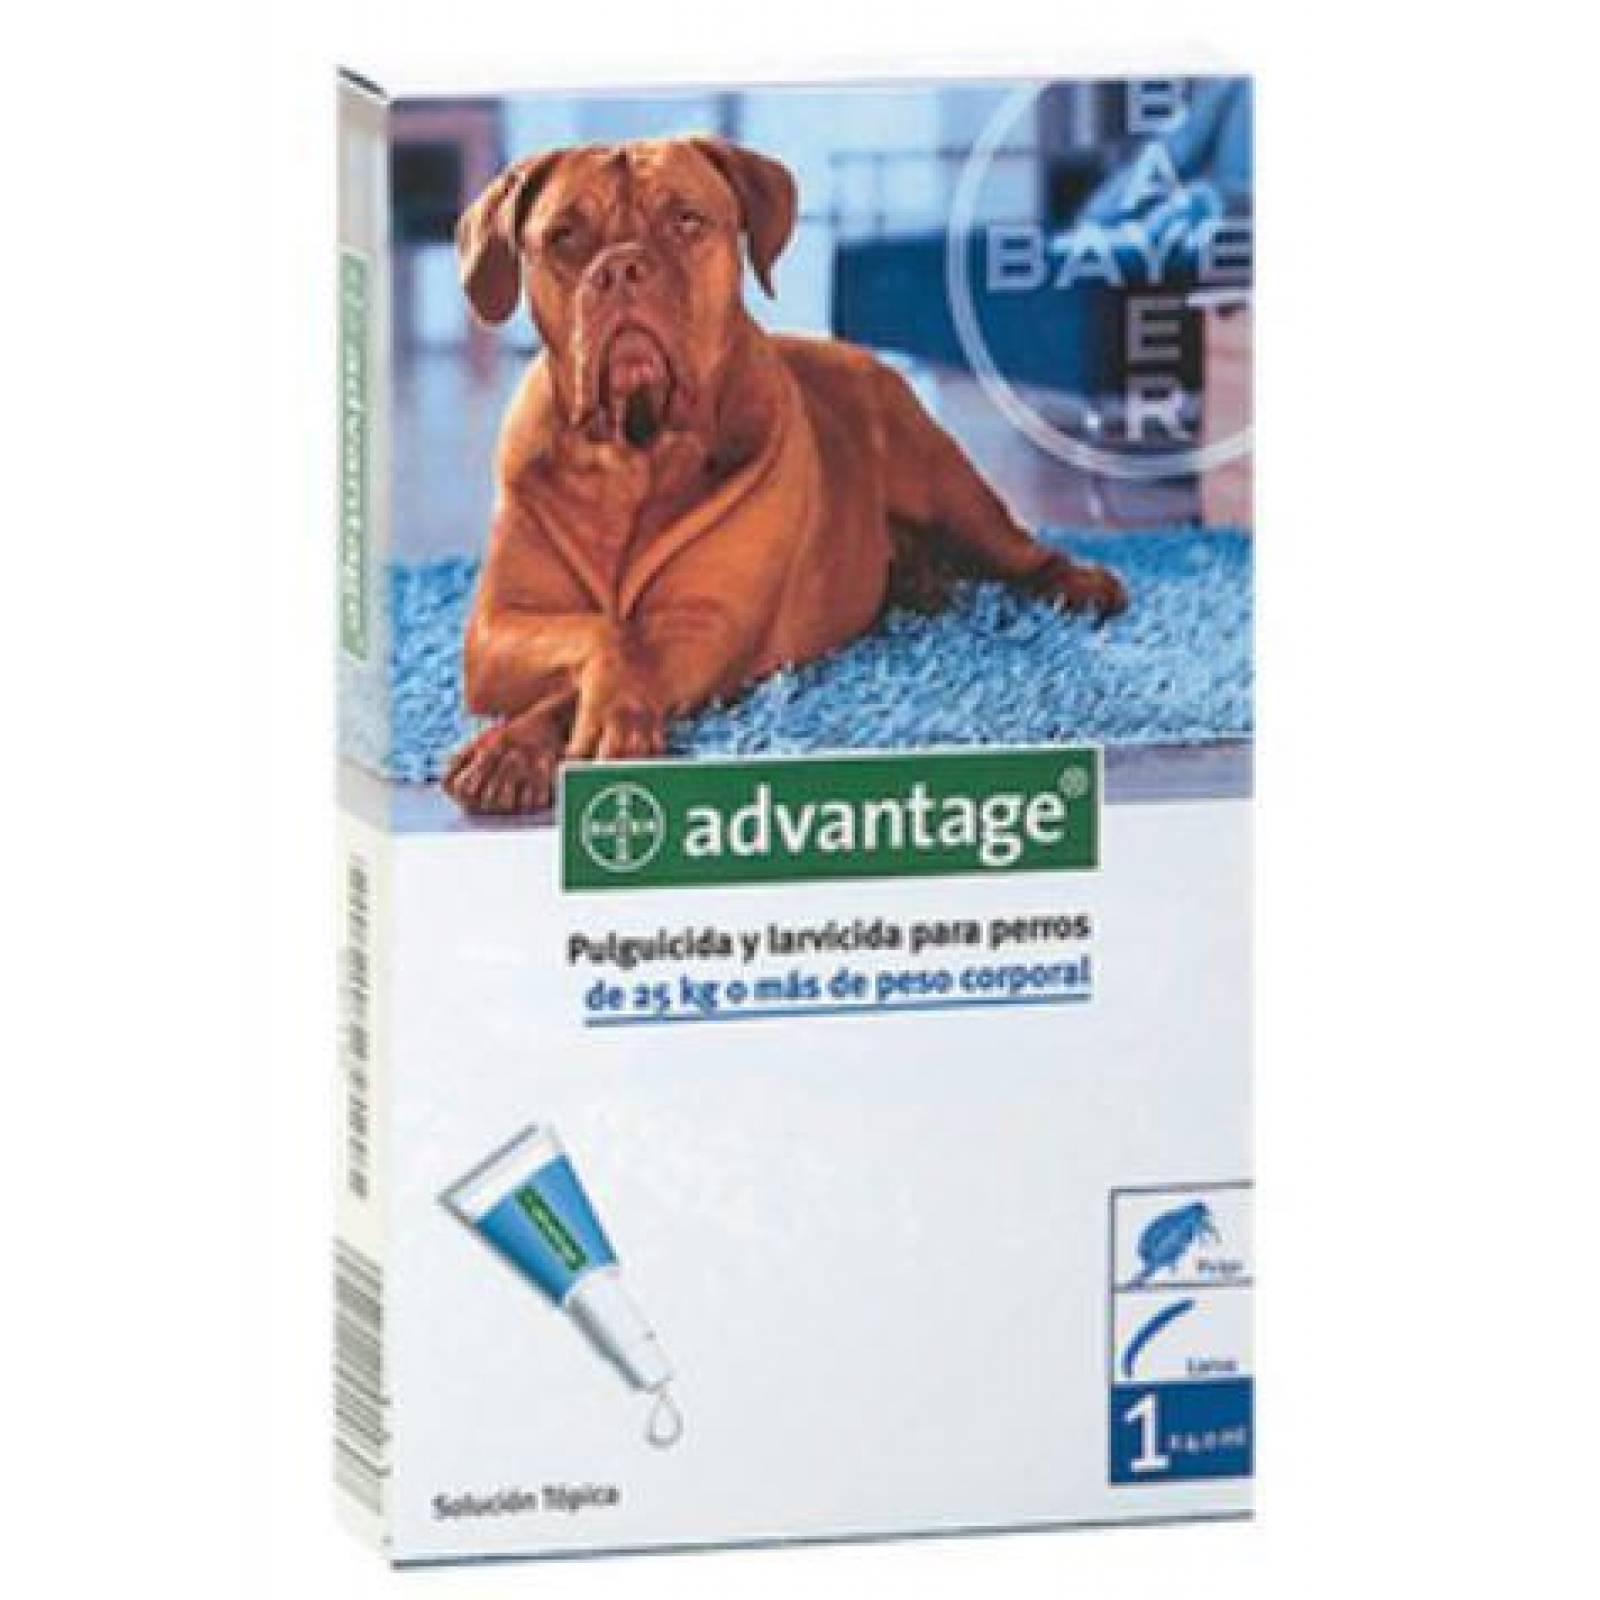 ADVANTAGE Antipulgas para Perros Solución Tópica pipeta de 4.0 ML